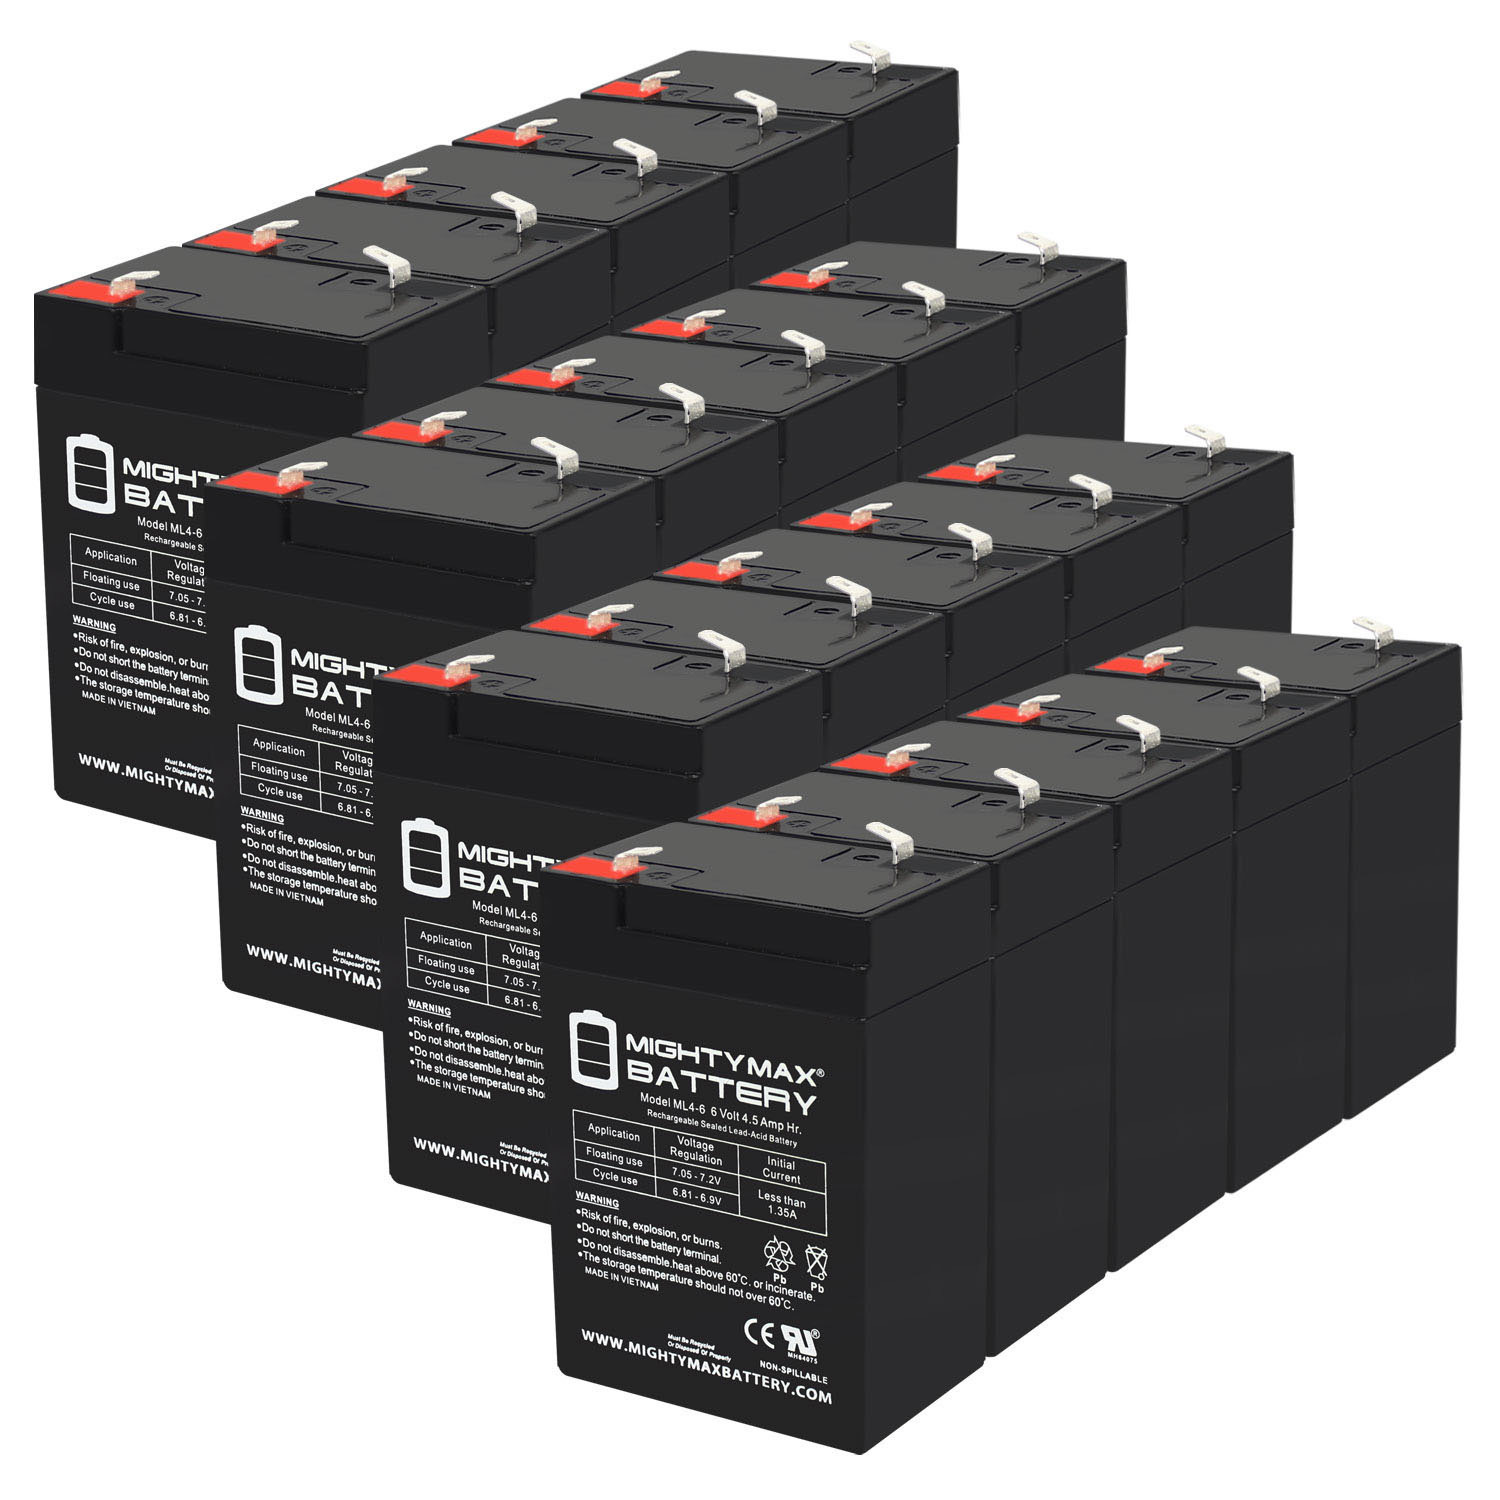 6V 4.5AH SLA Replacement Battery for Elan 1660B - 20 Pack